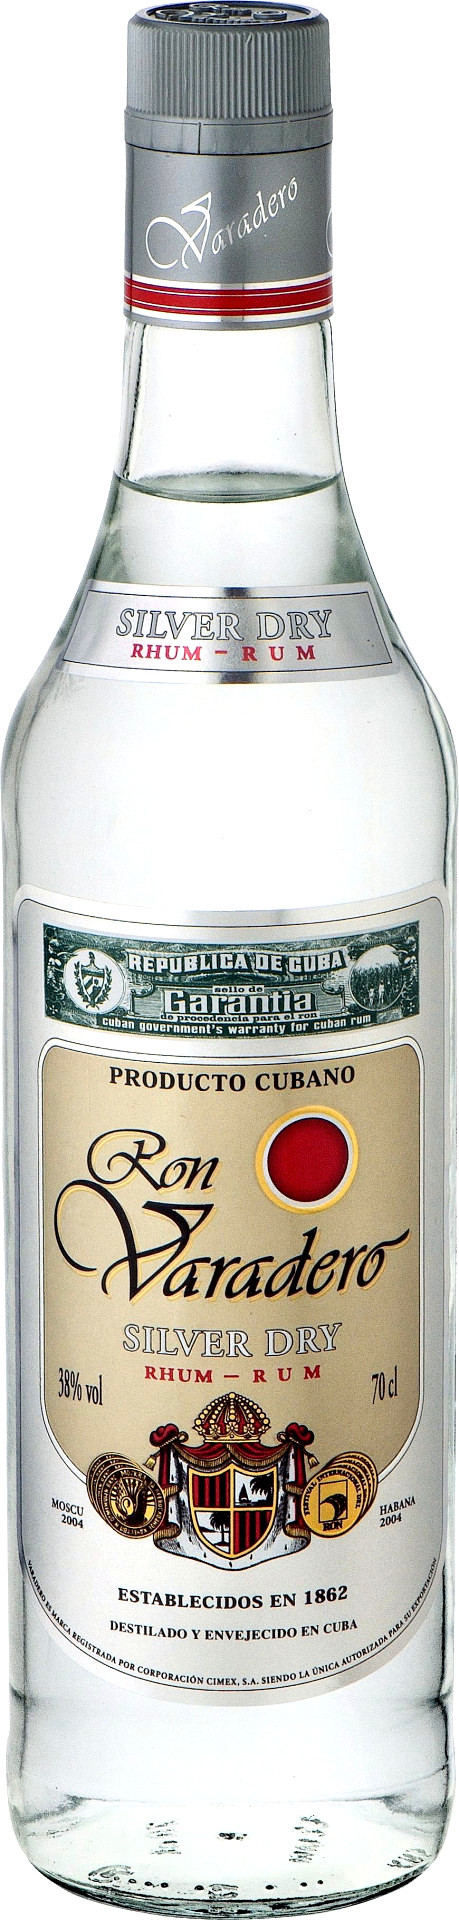 Varadero Silver Dry Rum 0,7l